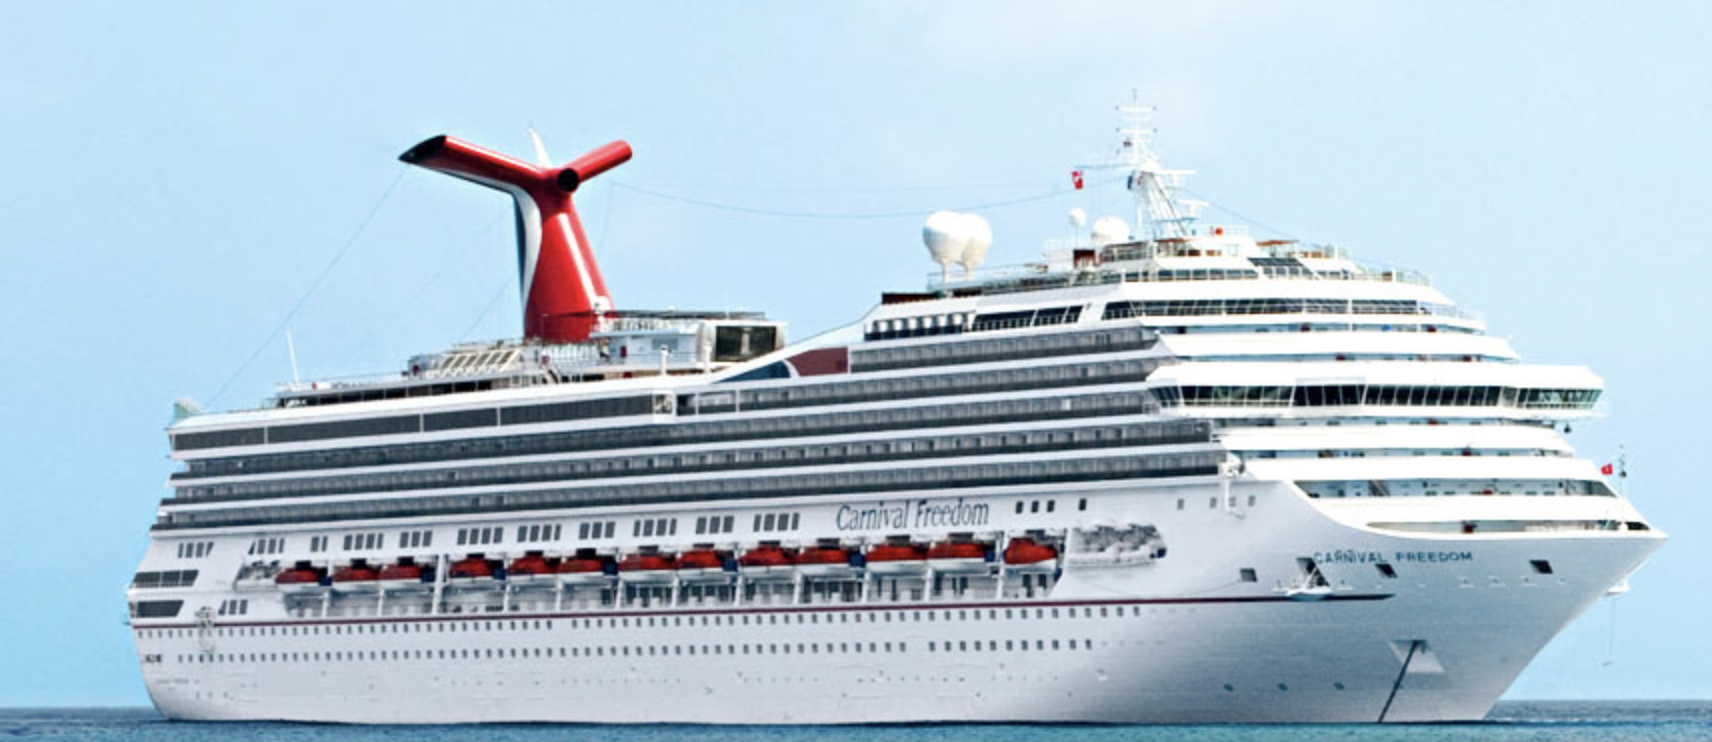 CDC Warns Against Cruise Ship Travel